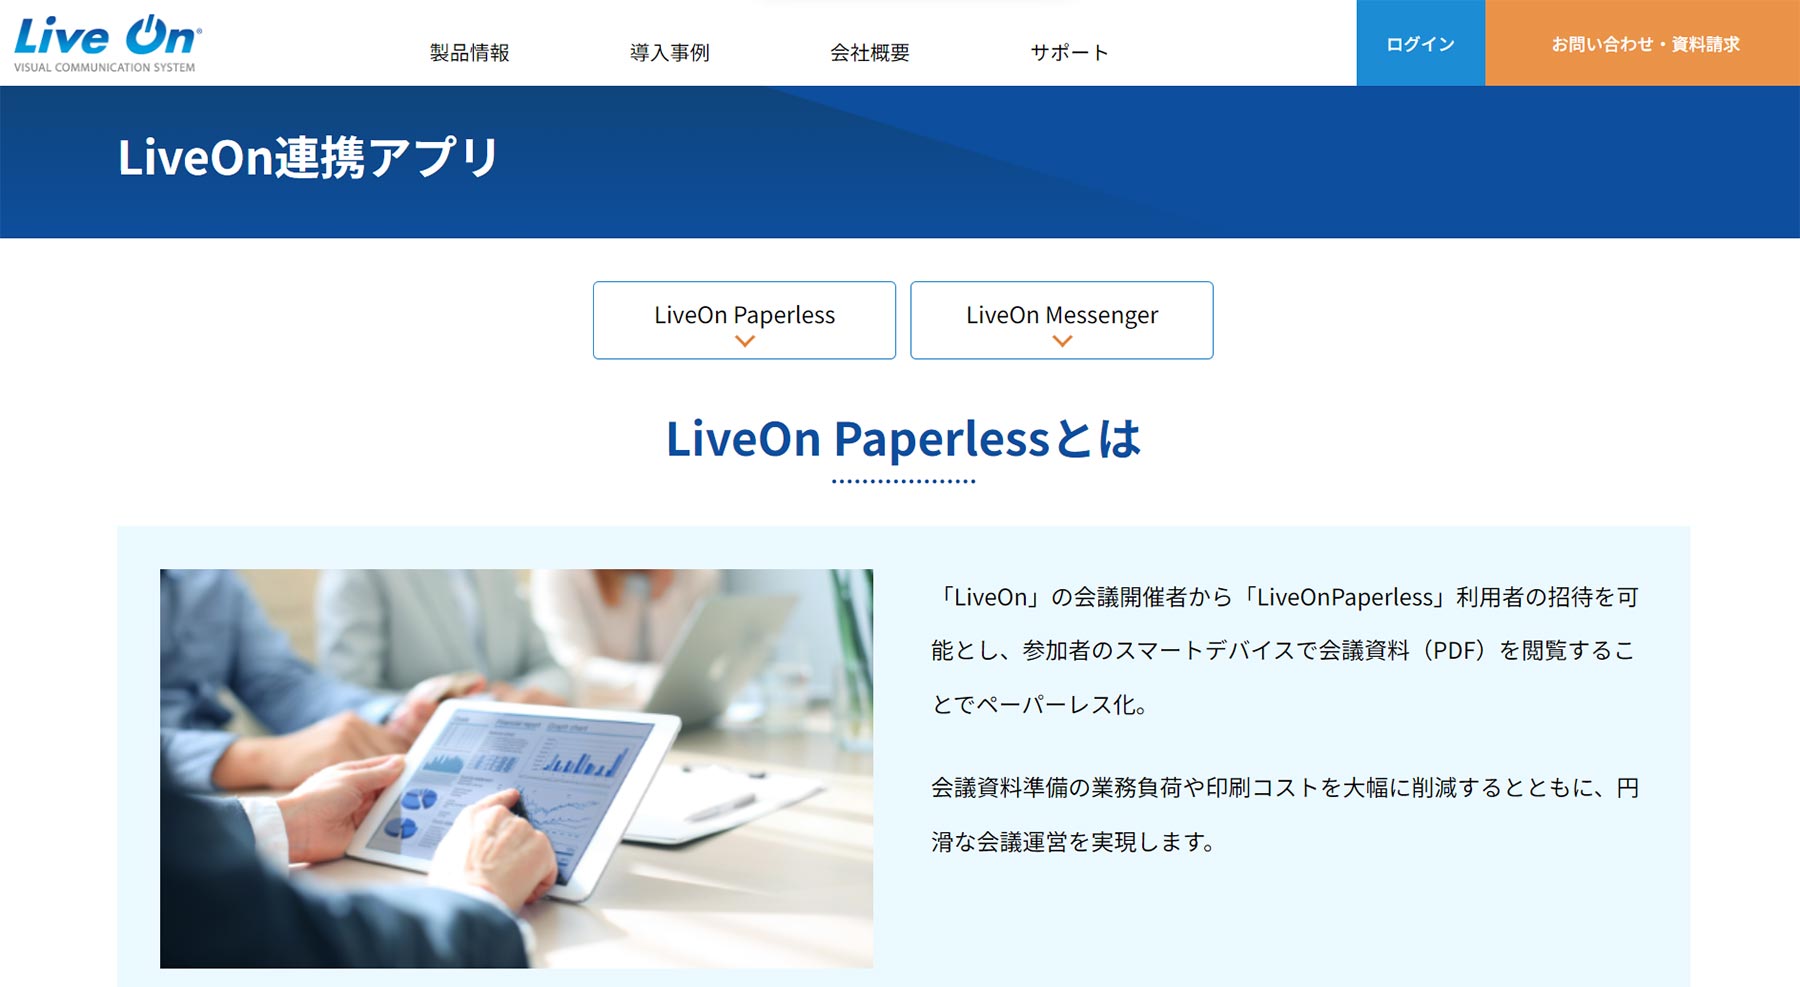 LiveOnPaperless公式Webサイト